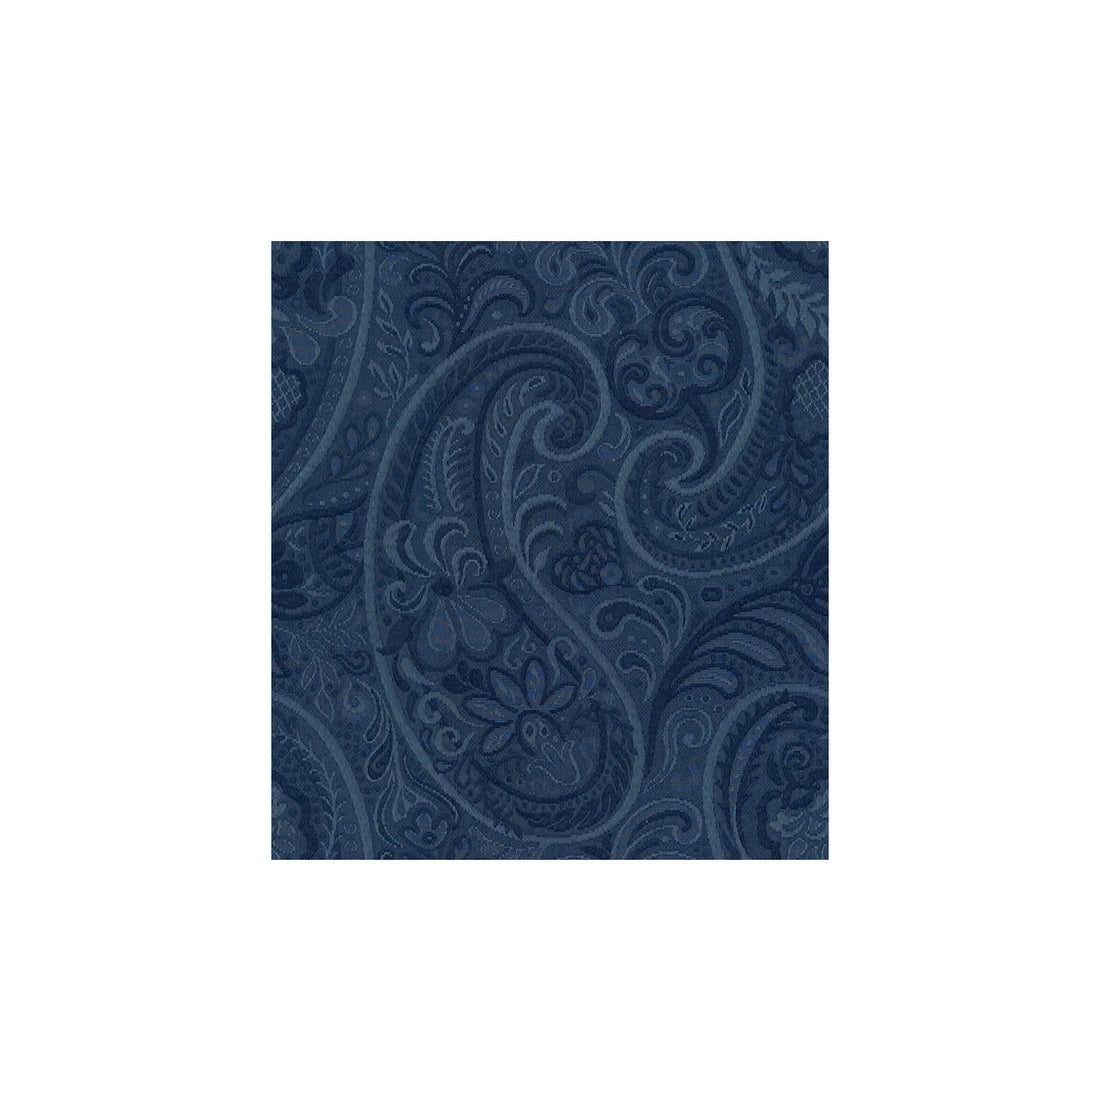 Kravet Design fabric in 31405-50 color - pattern 31405.50.0 - by Kravet Design in the Gis collection